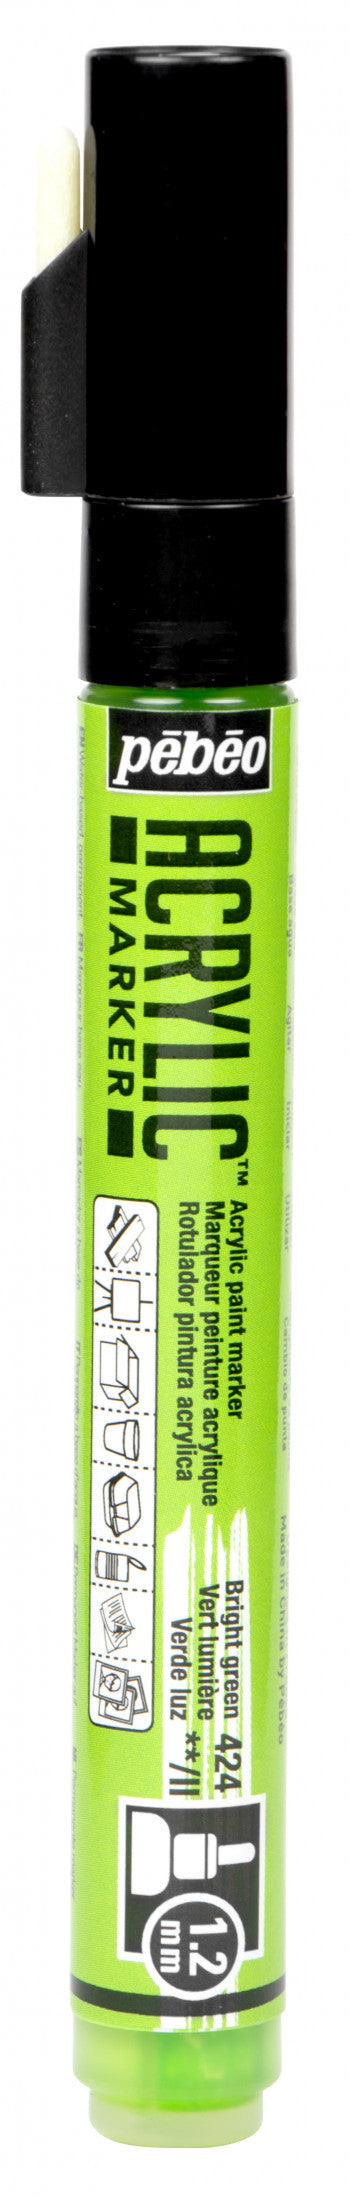 Acrylic Marker 1.2mm Pebeo      Vert lumière - 424